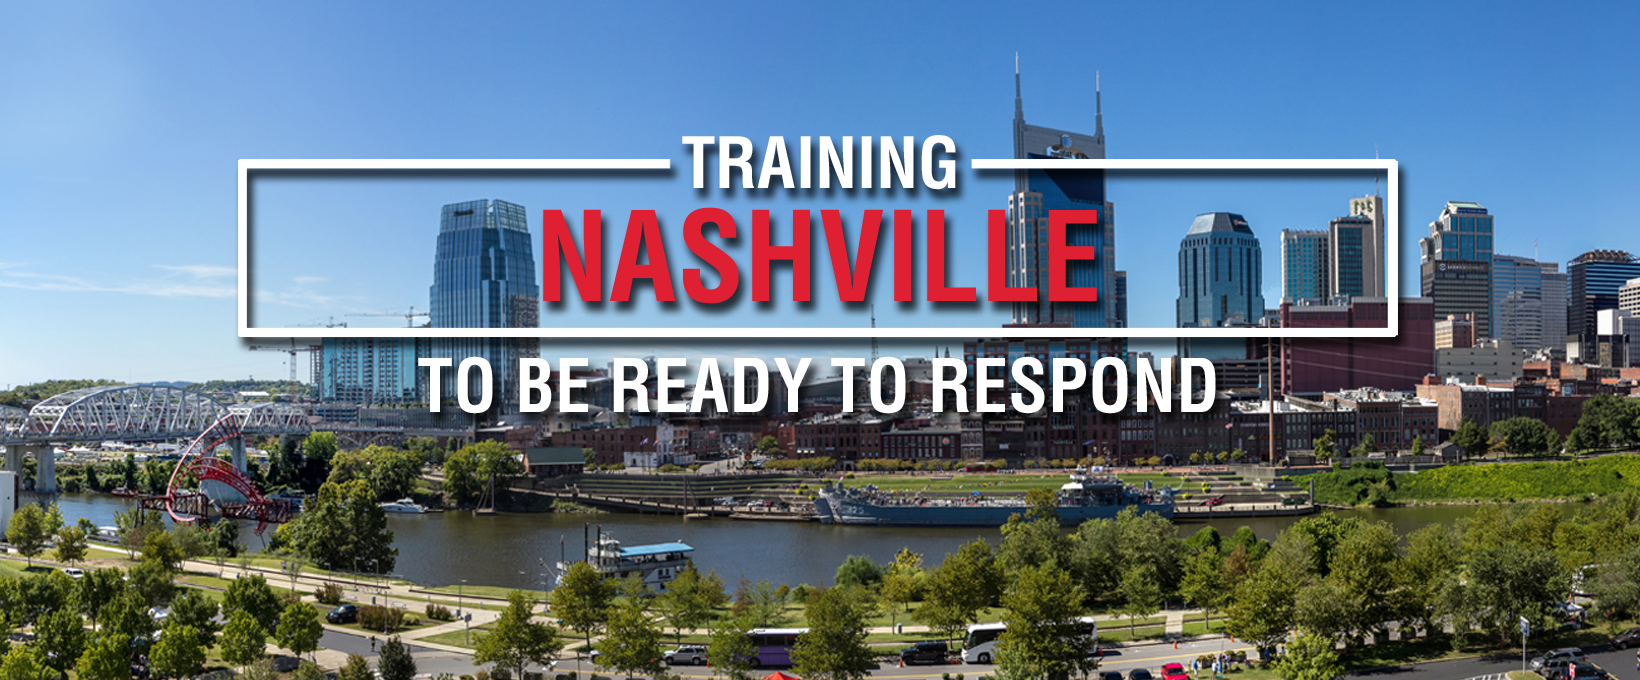 Training Nashville in CPR!